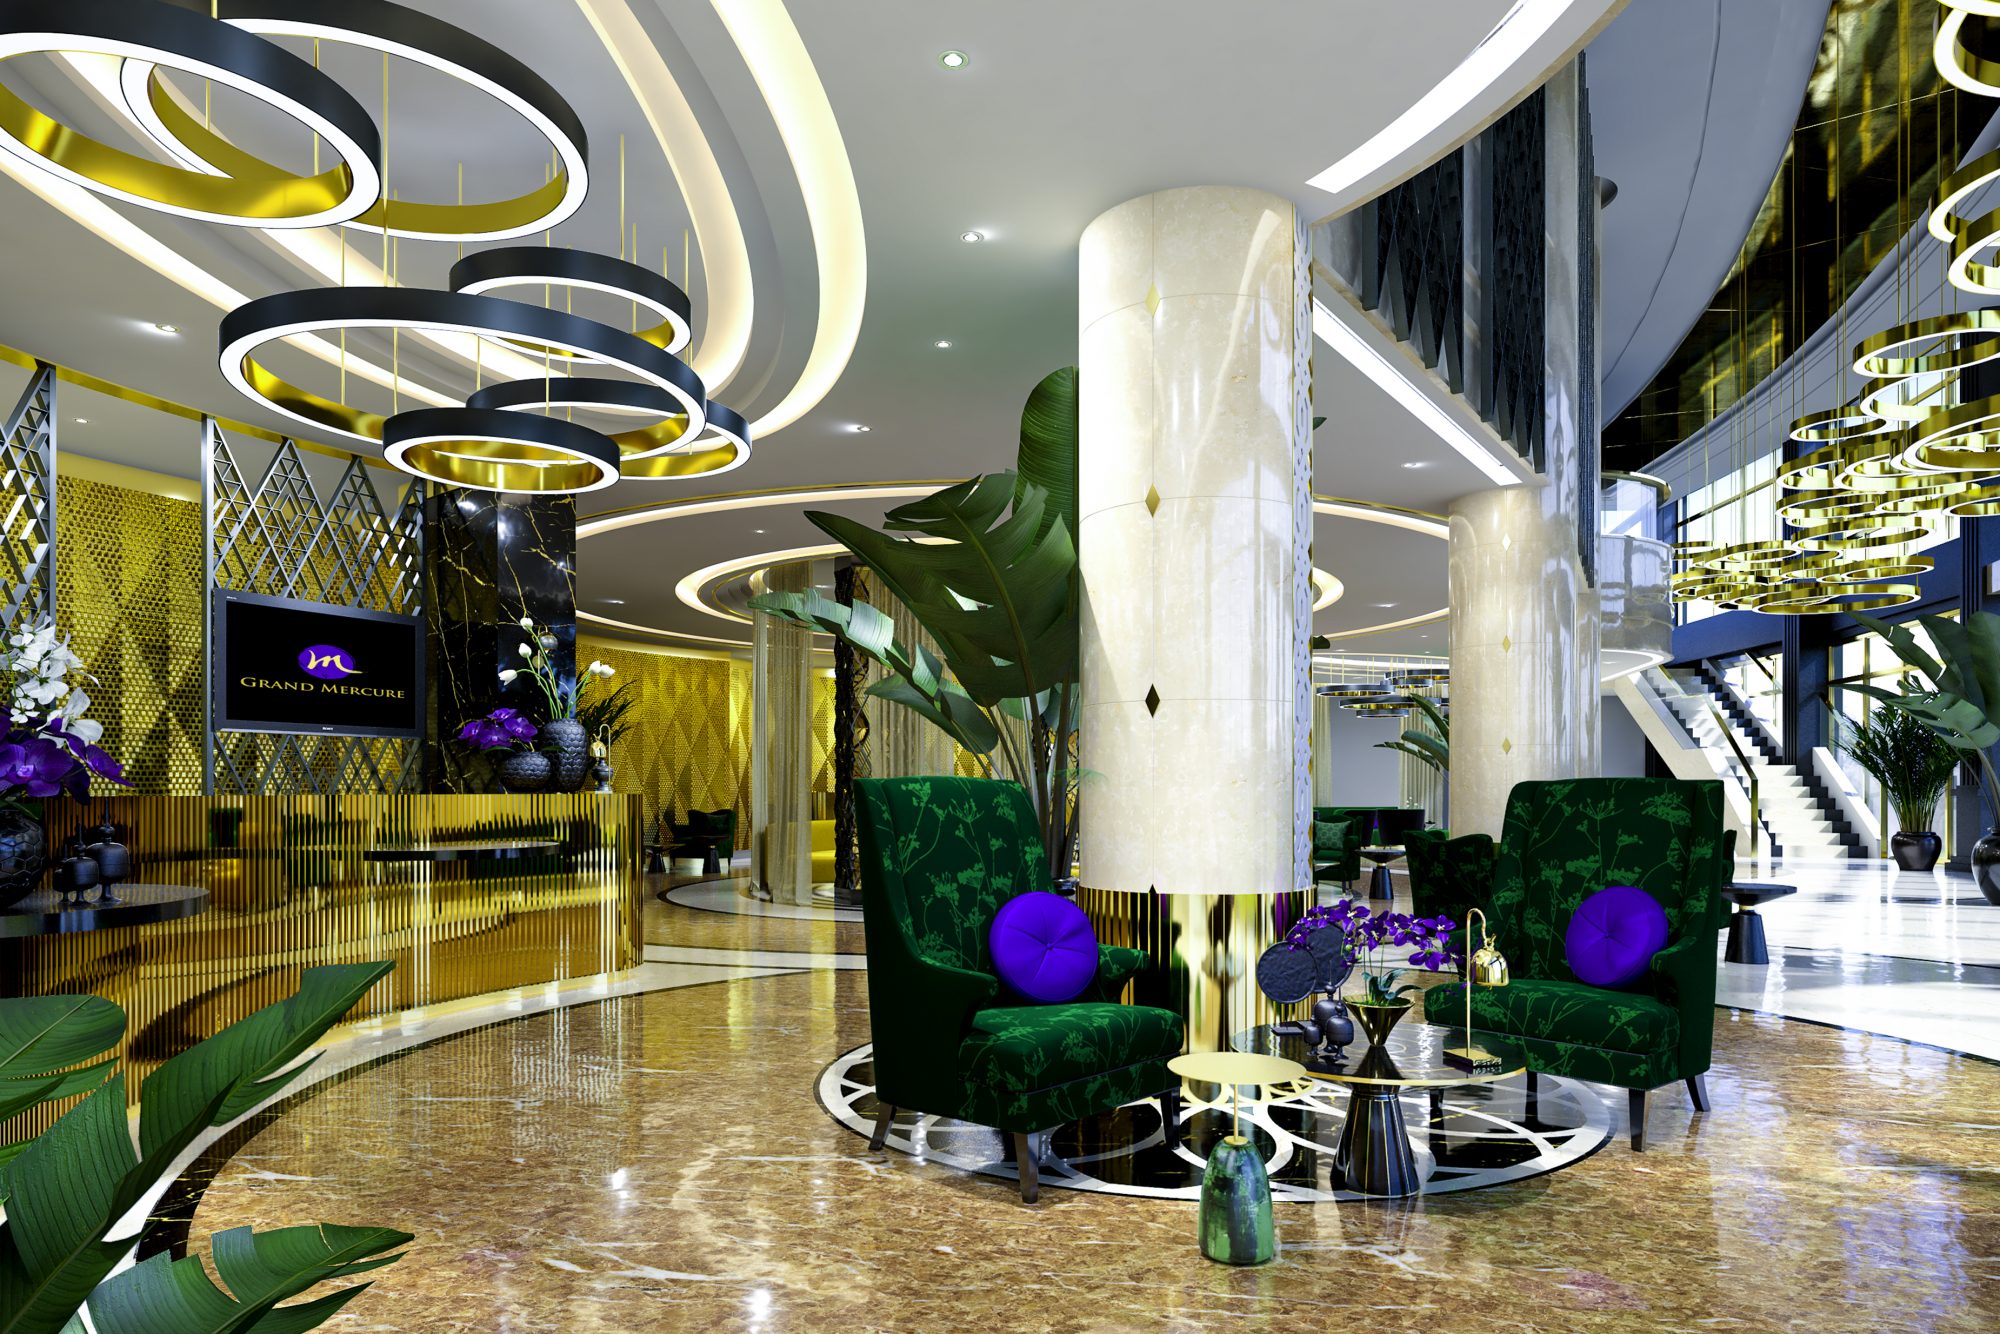 Grand Mercure Yangon Golden Empire - Lobby area